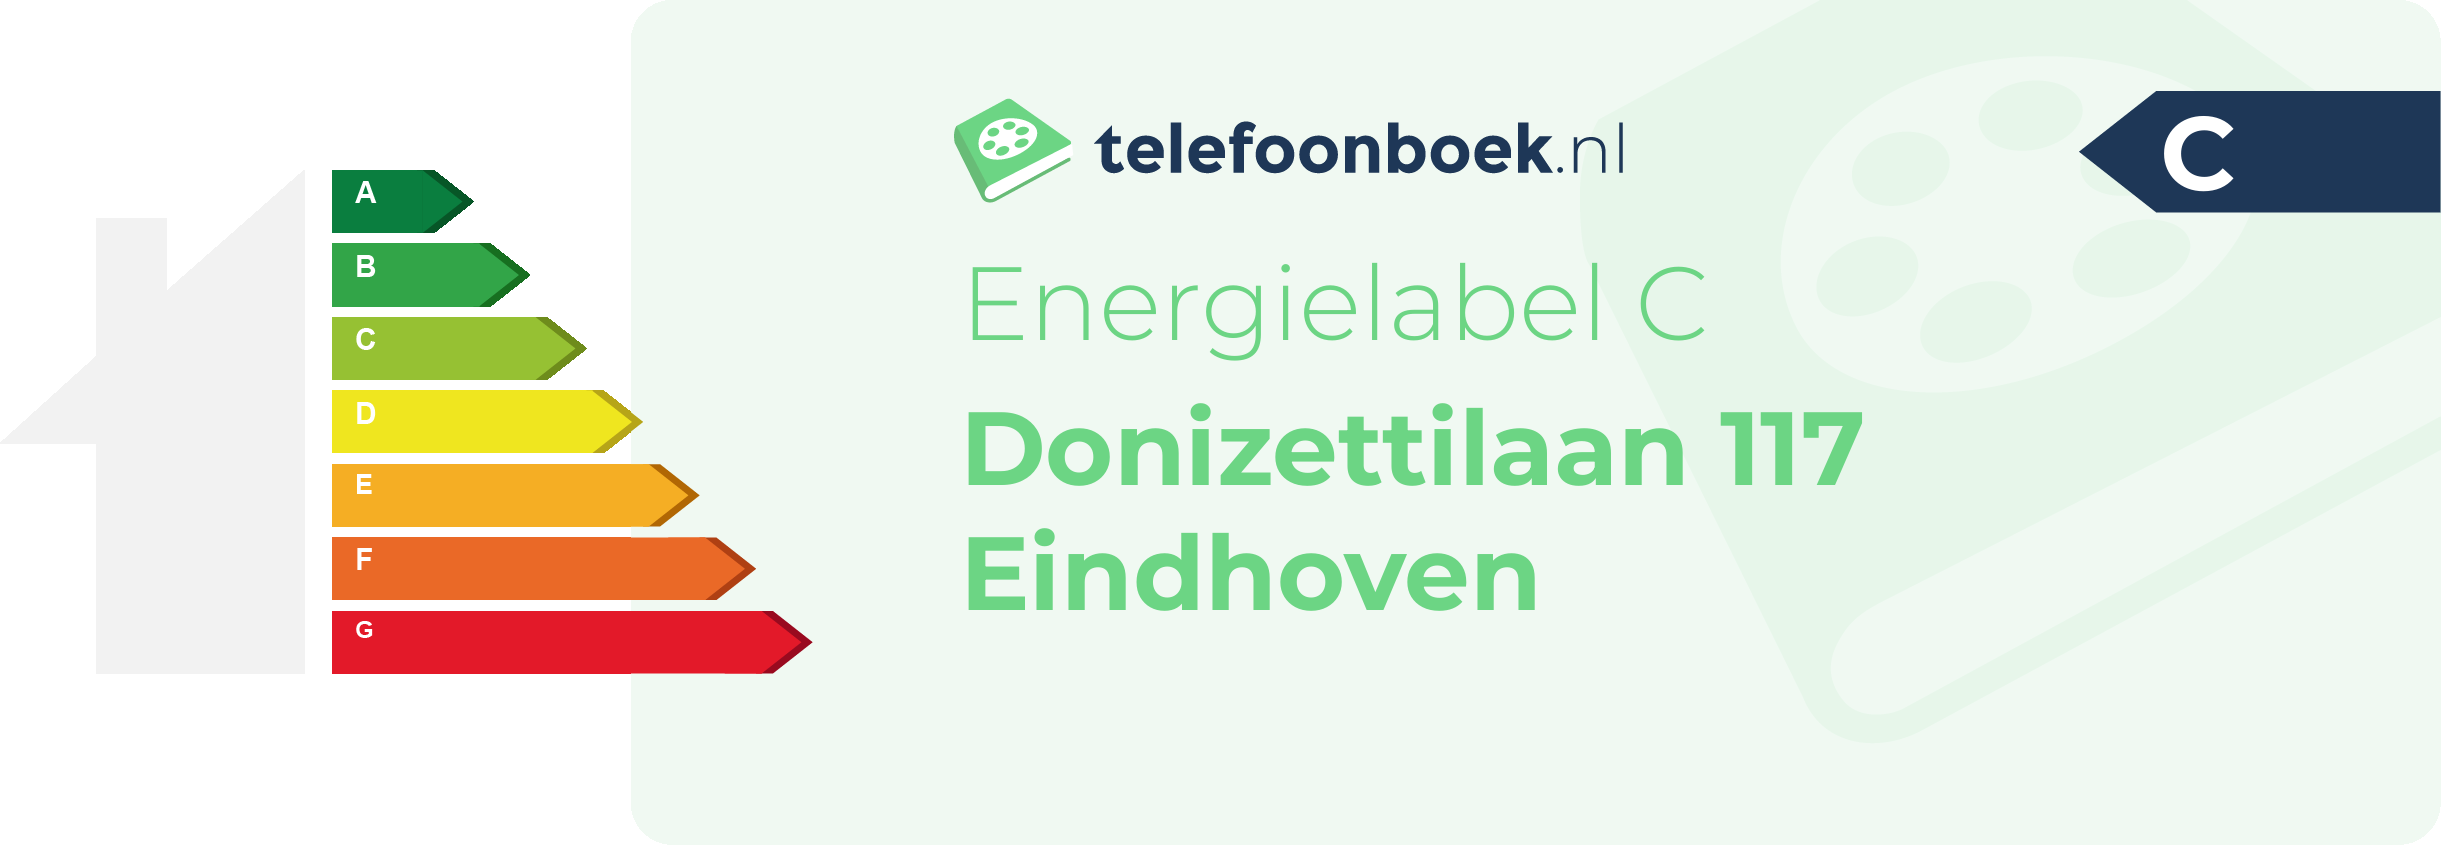 Energielabel Donizettilaan 117 Eindhoven